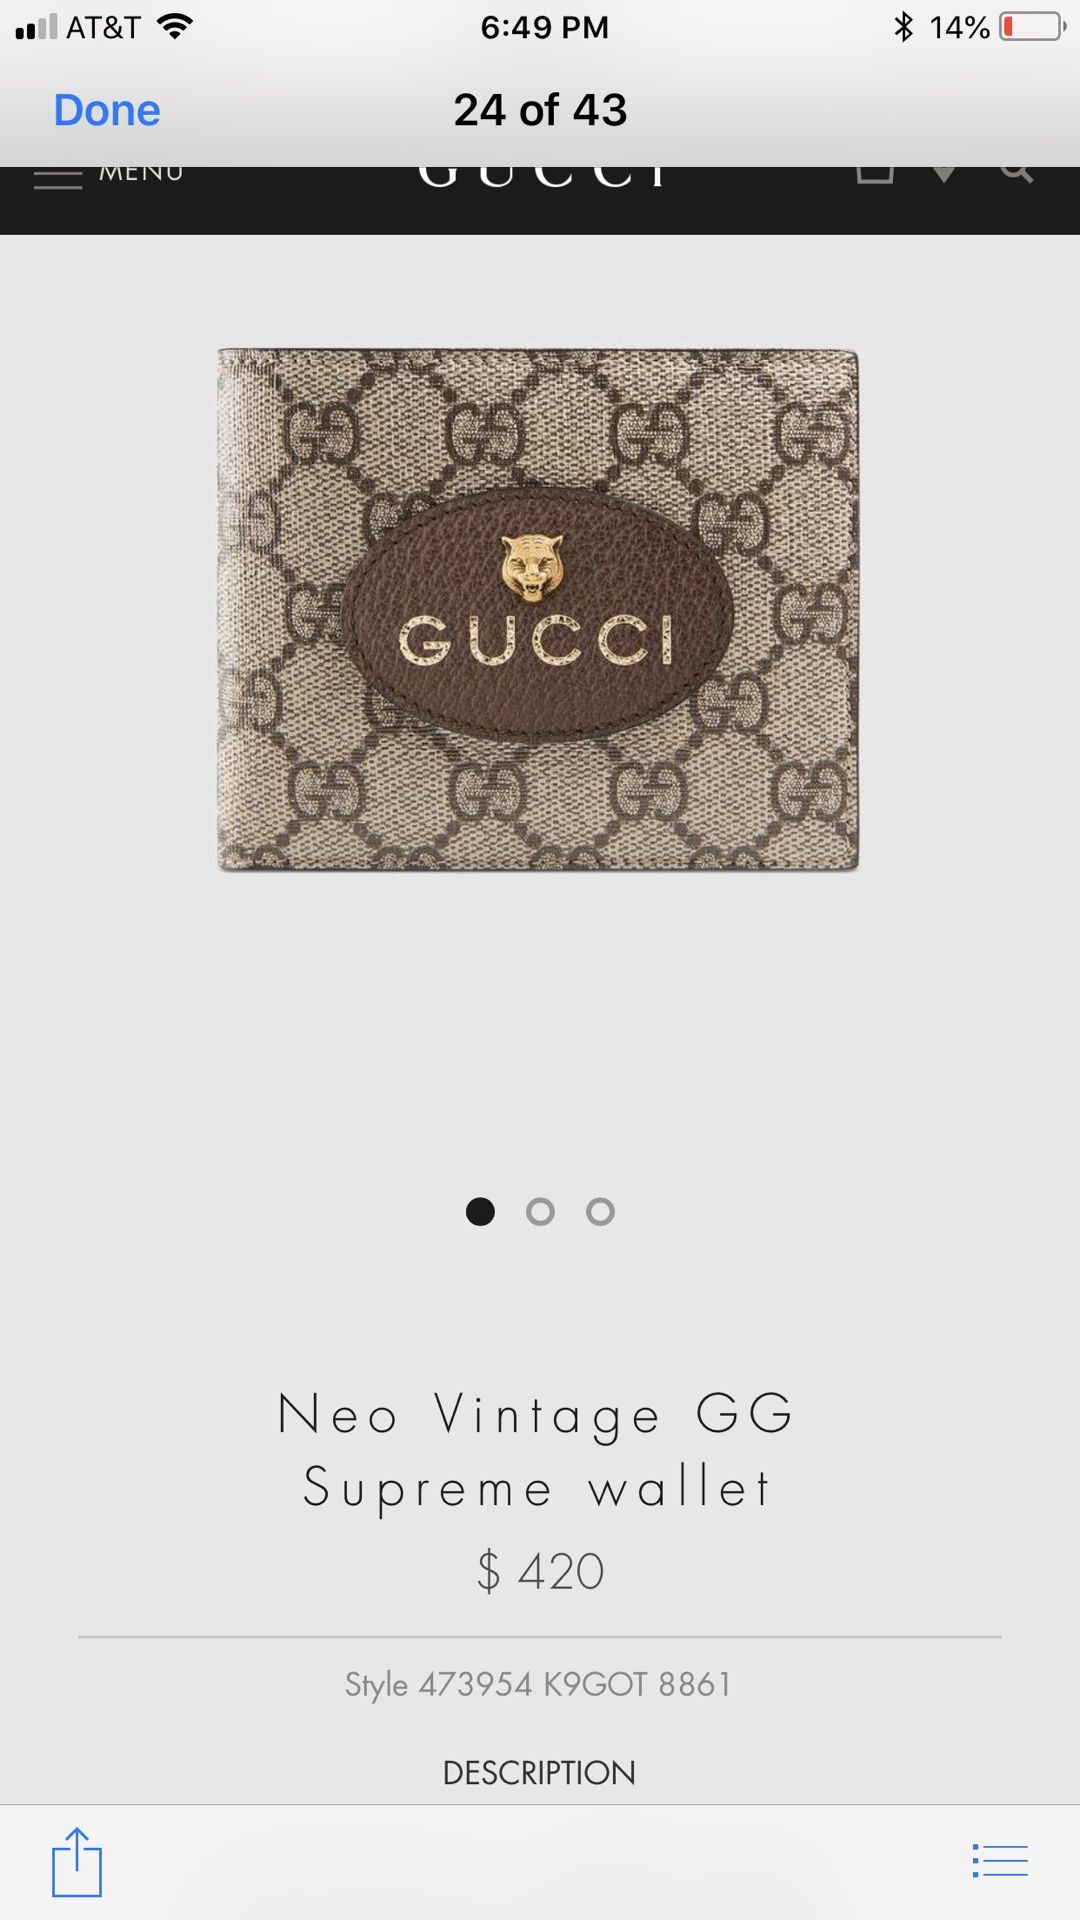 Neo vintage GG supreme wallet no box